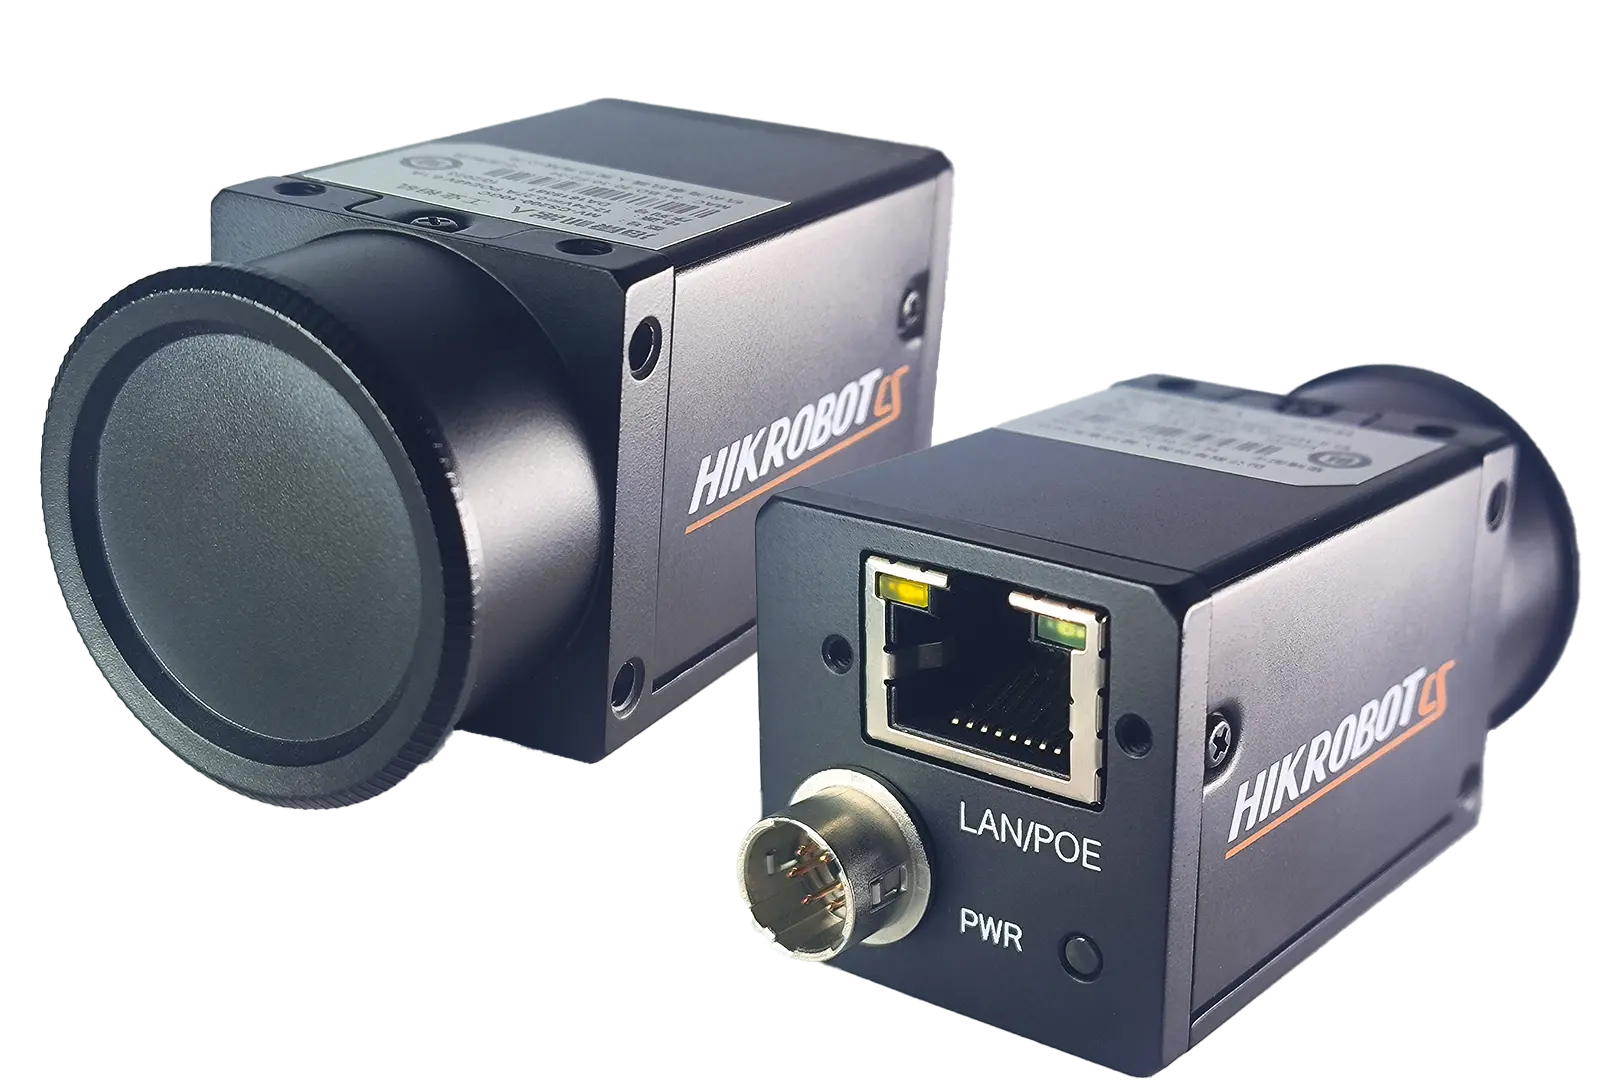 HIKROBOT 6MP 1/1.8 ''CMOS GigE MV-KU501X3-A0GM/GC машина видения камера для промышленной области